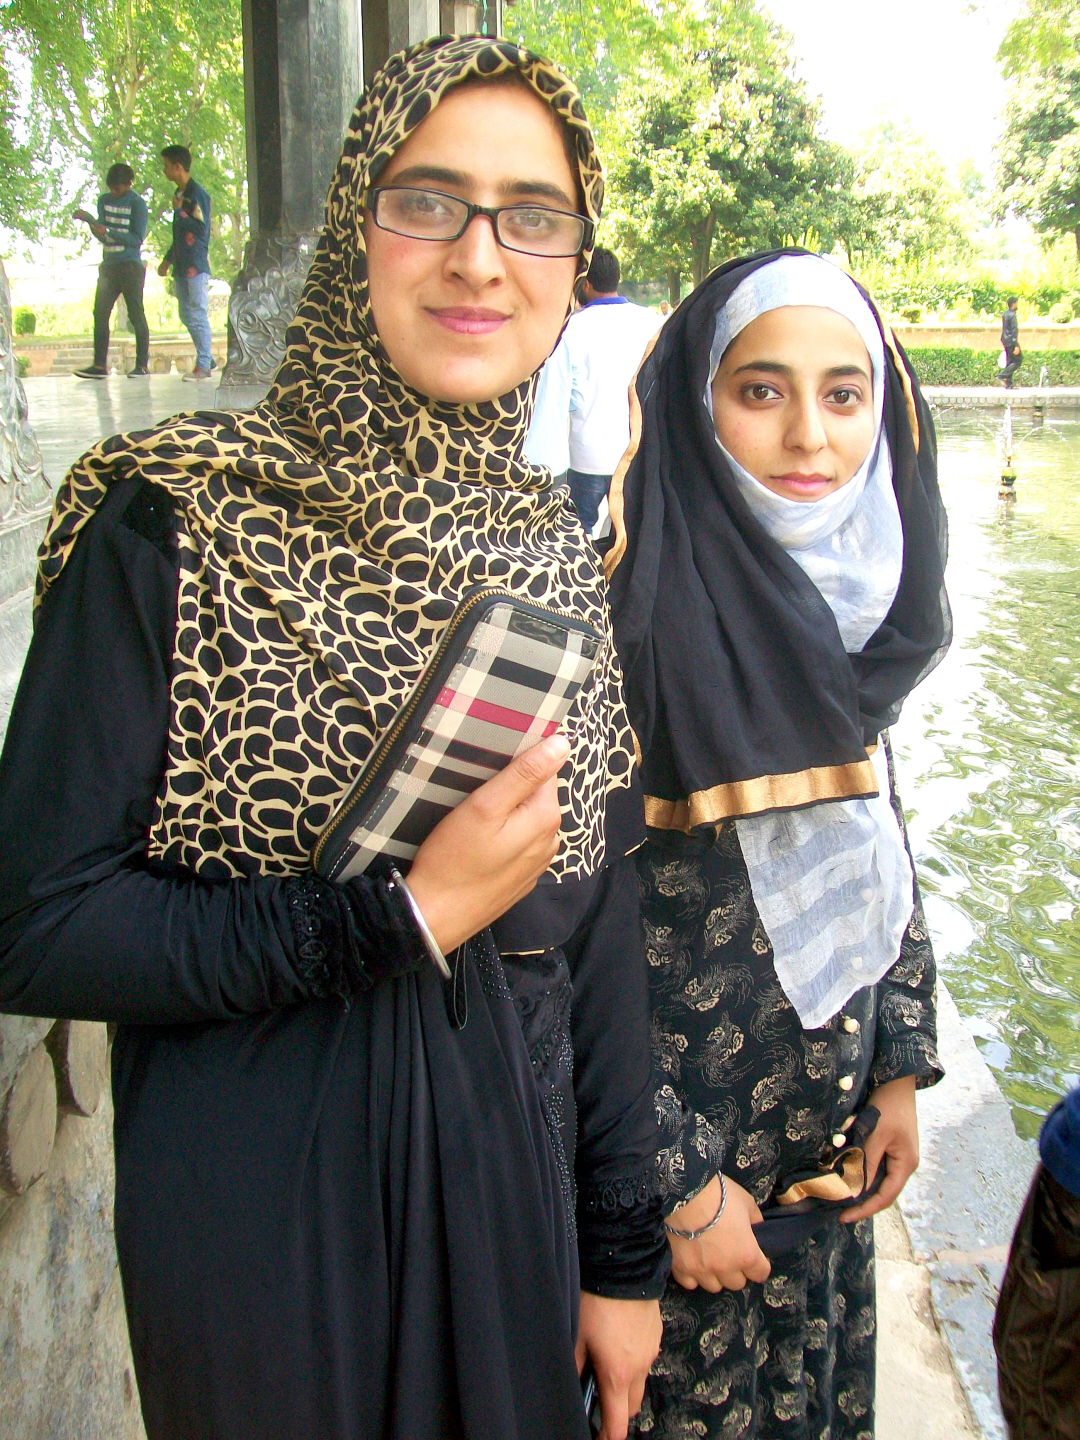 Best Friends Since Childhood - Students of Law & Eduction - Srinagar, Kashmir